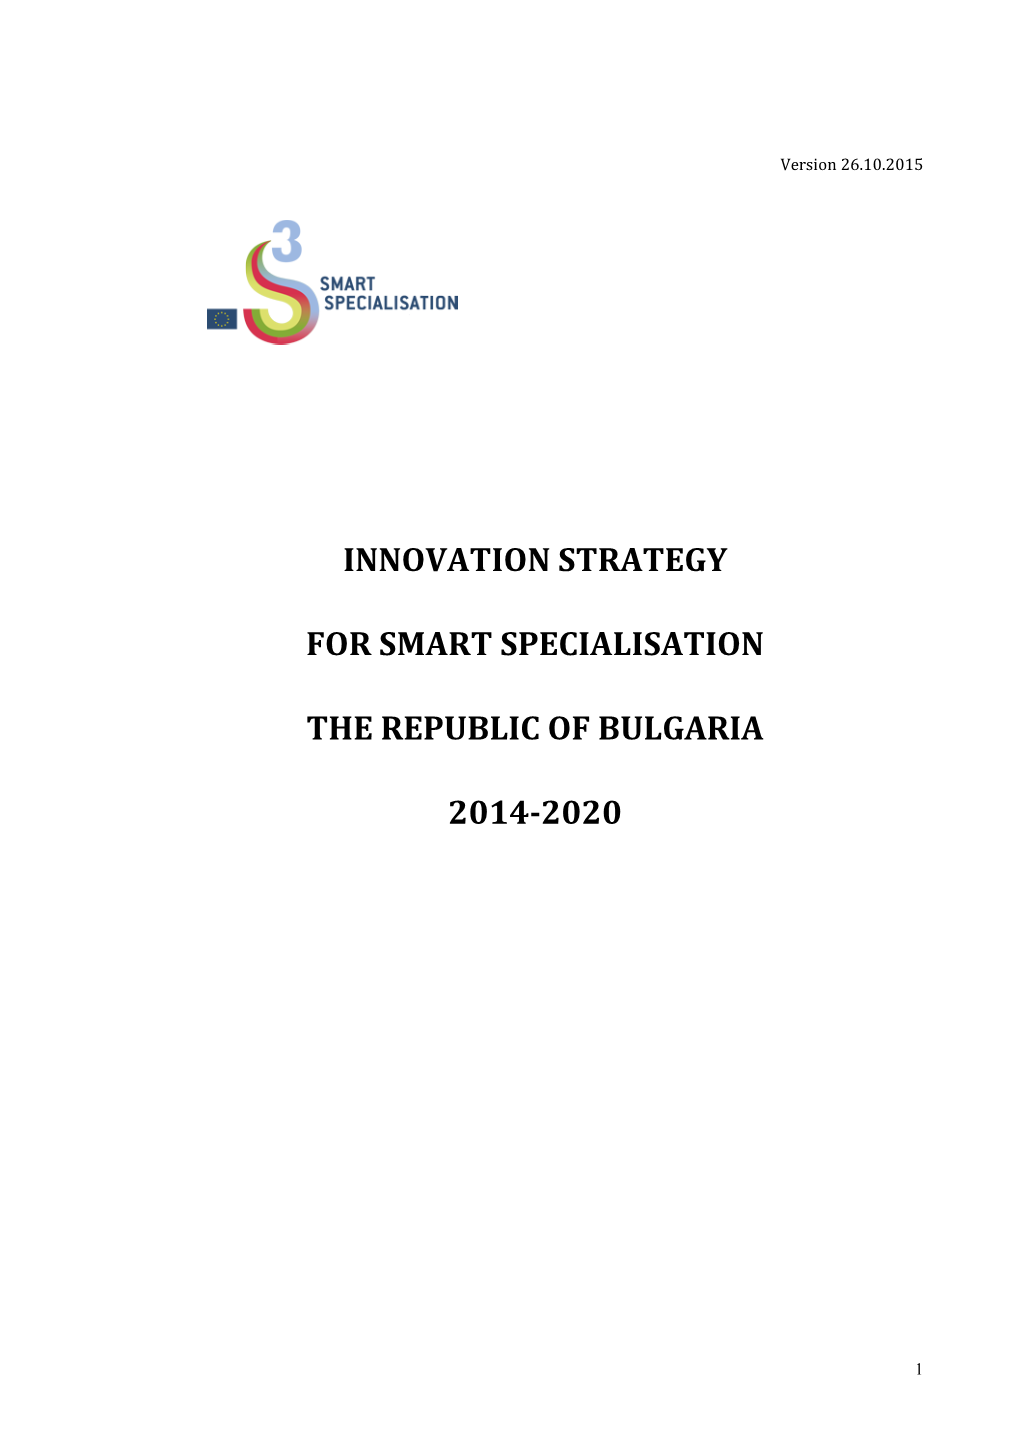 Innovation Strategy for Smart Specialization 2014-2020